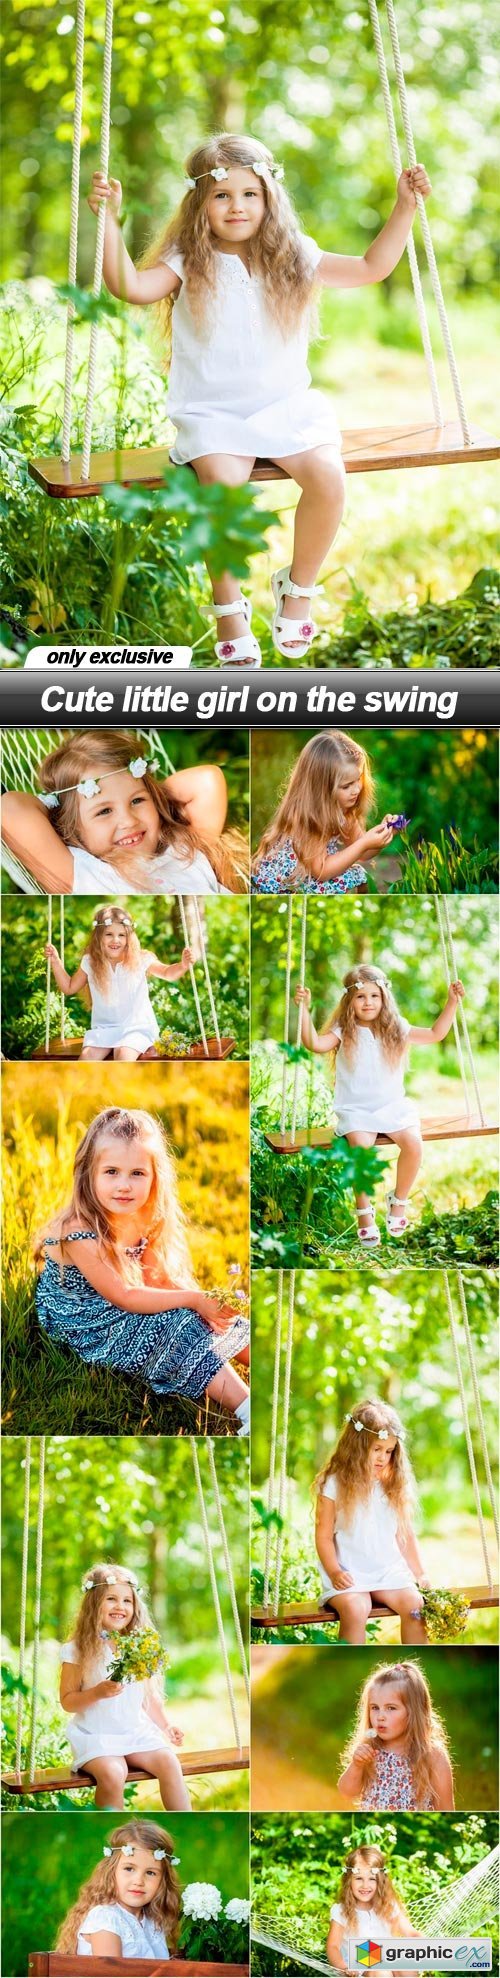 Cute little girl on the swing - 10 UHQ JPEG